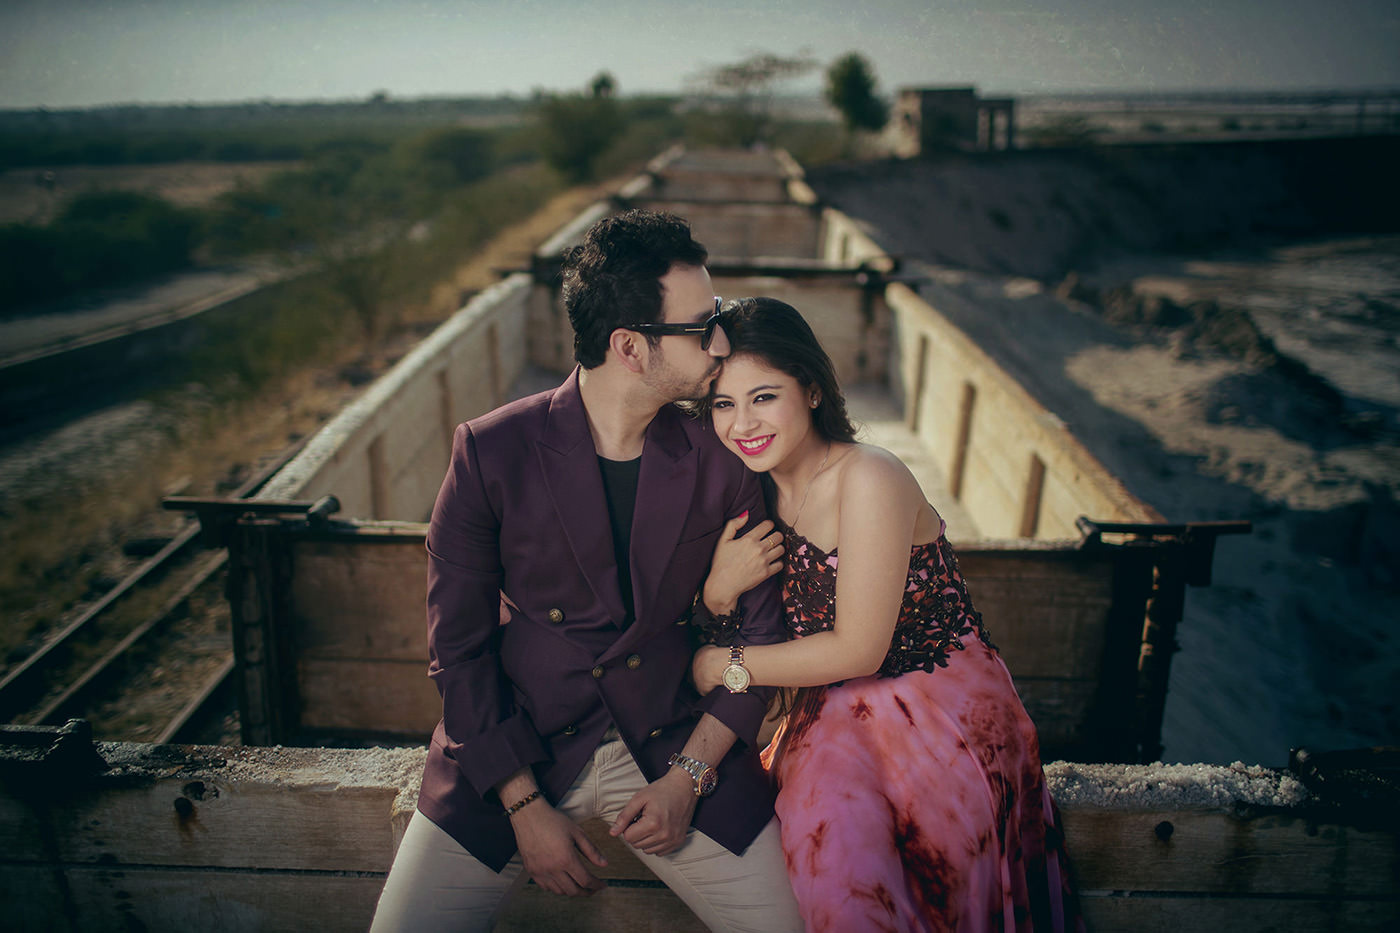 Best wedding photographer in india: editing